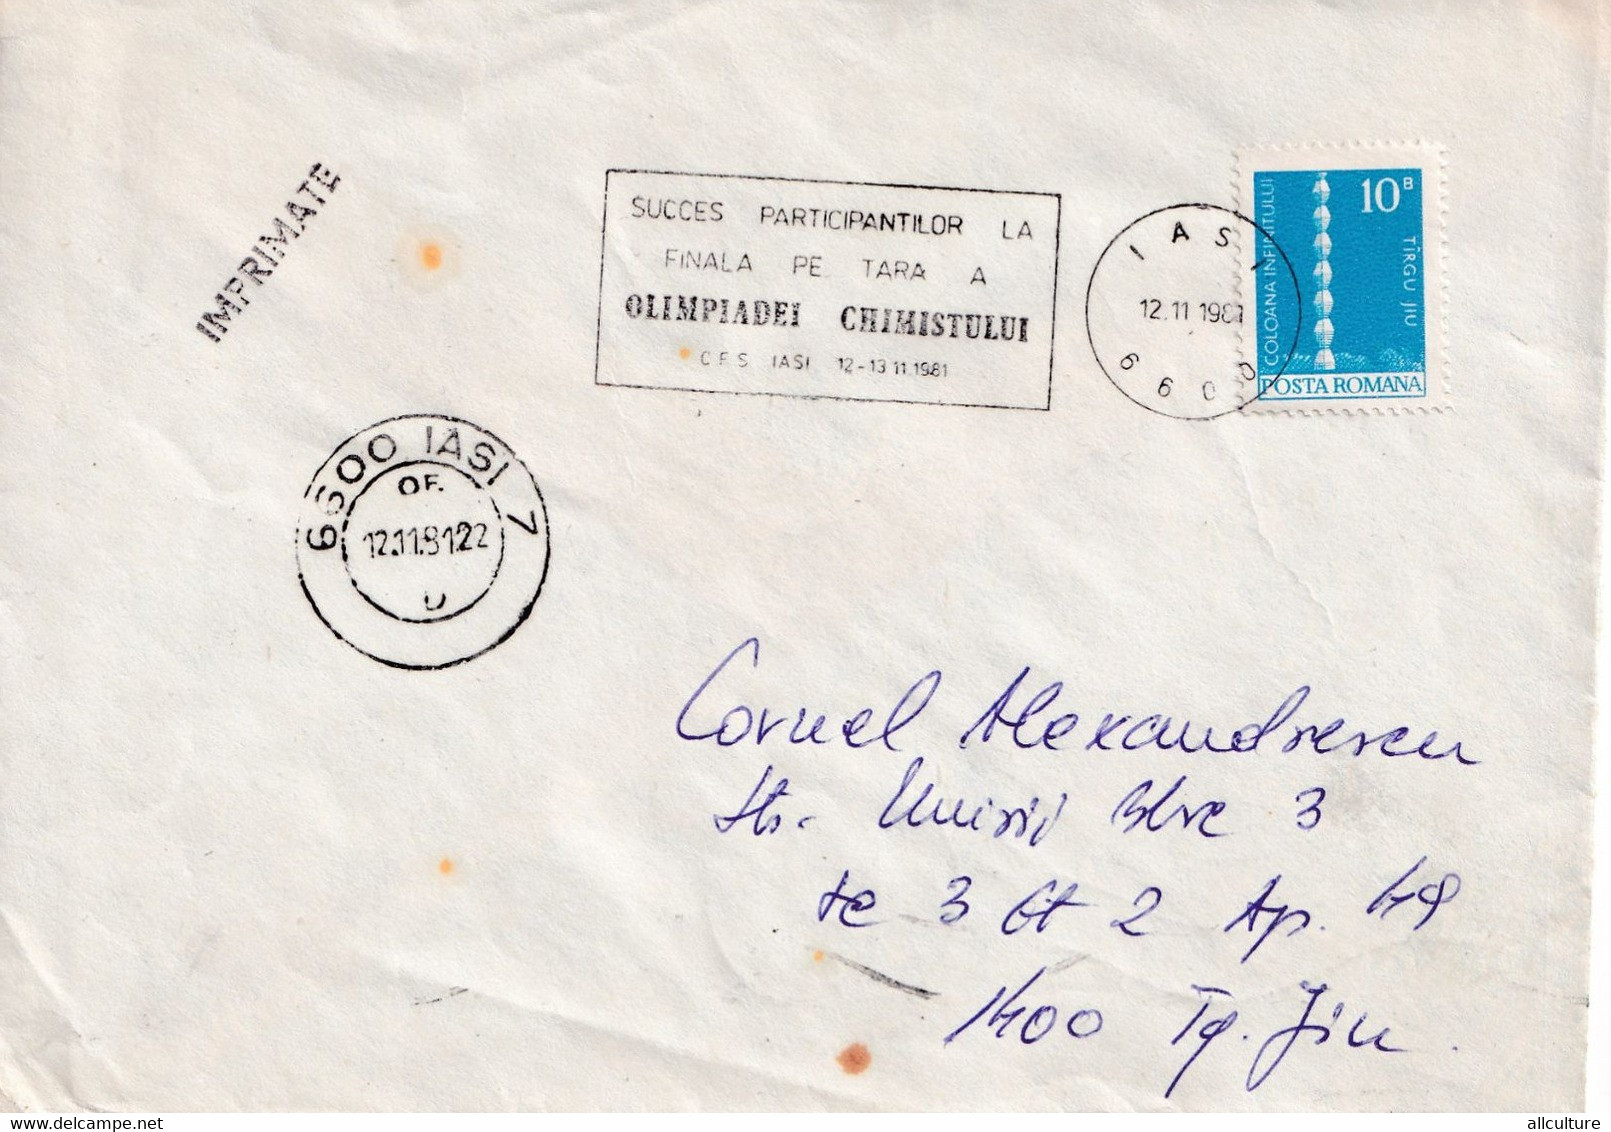 A3084 - Olimpiada Chimistului, Iasi 1981 Romania Posta Romana - Lettres & Documents